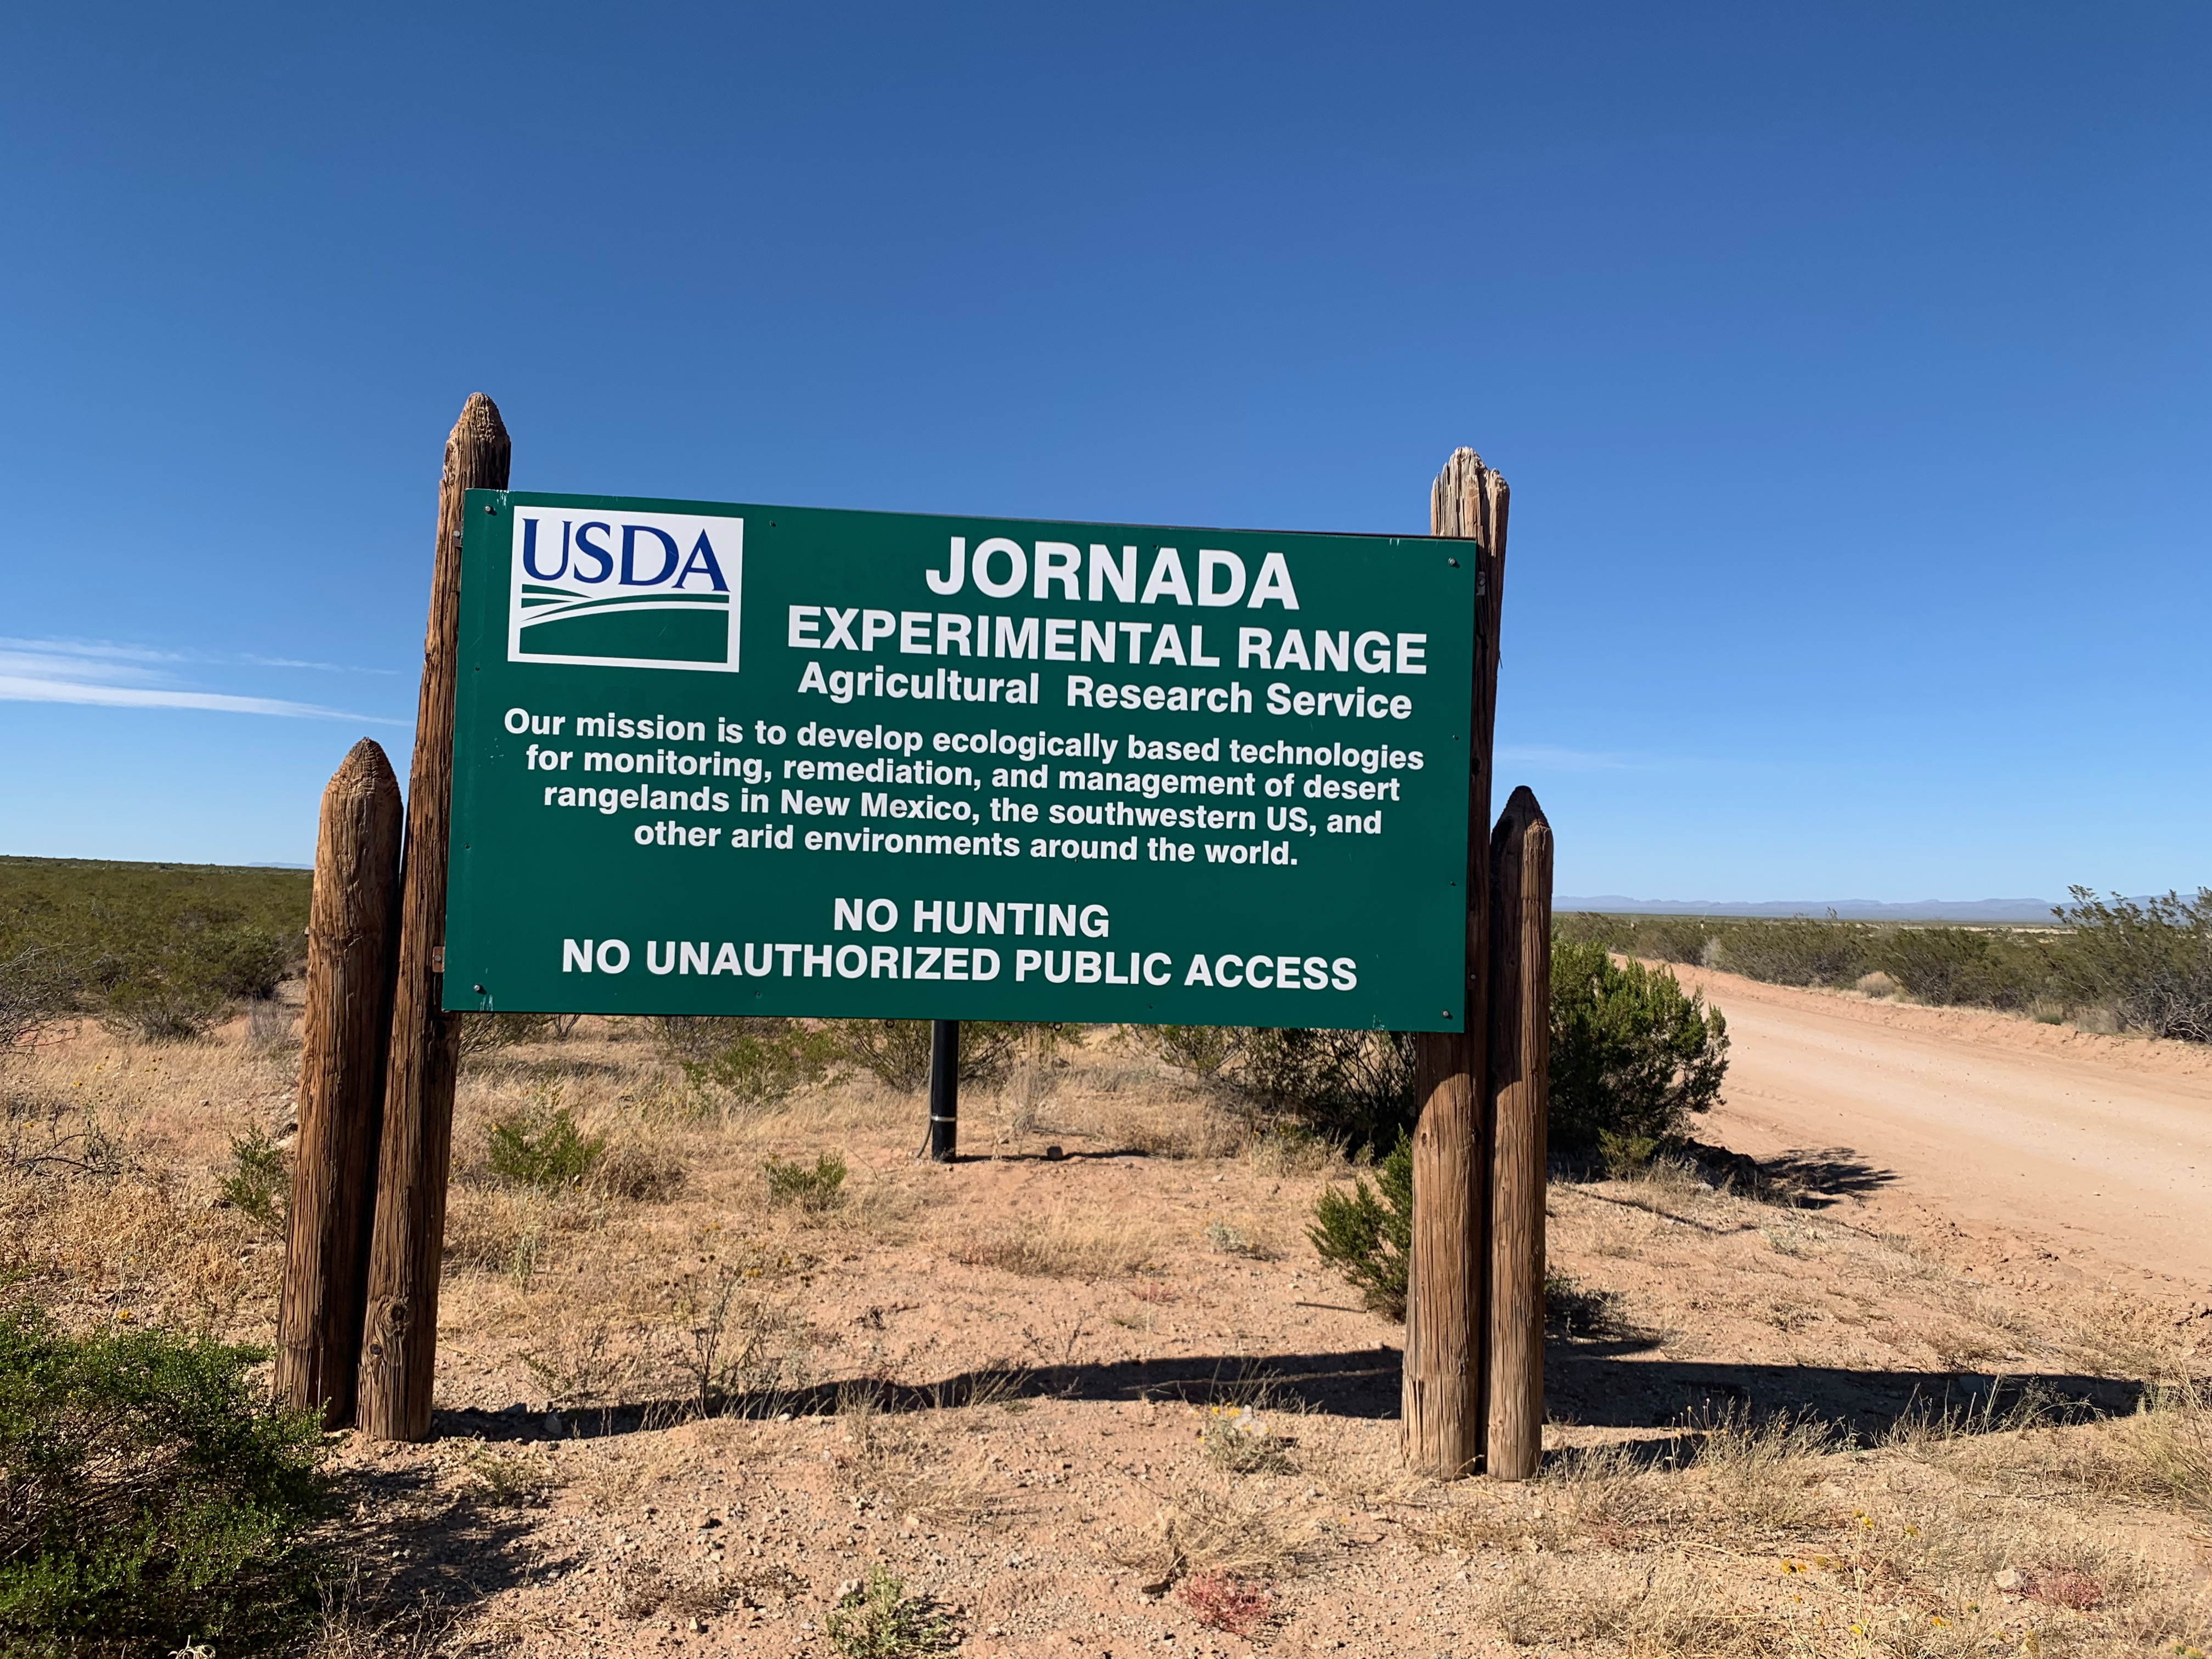 Entrance gate at the Jornada Experimental Range